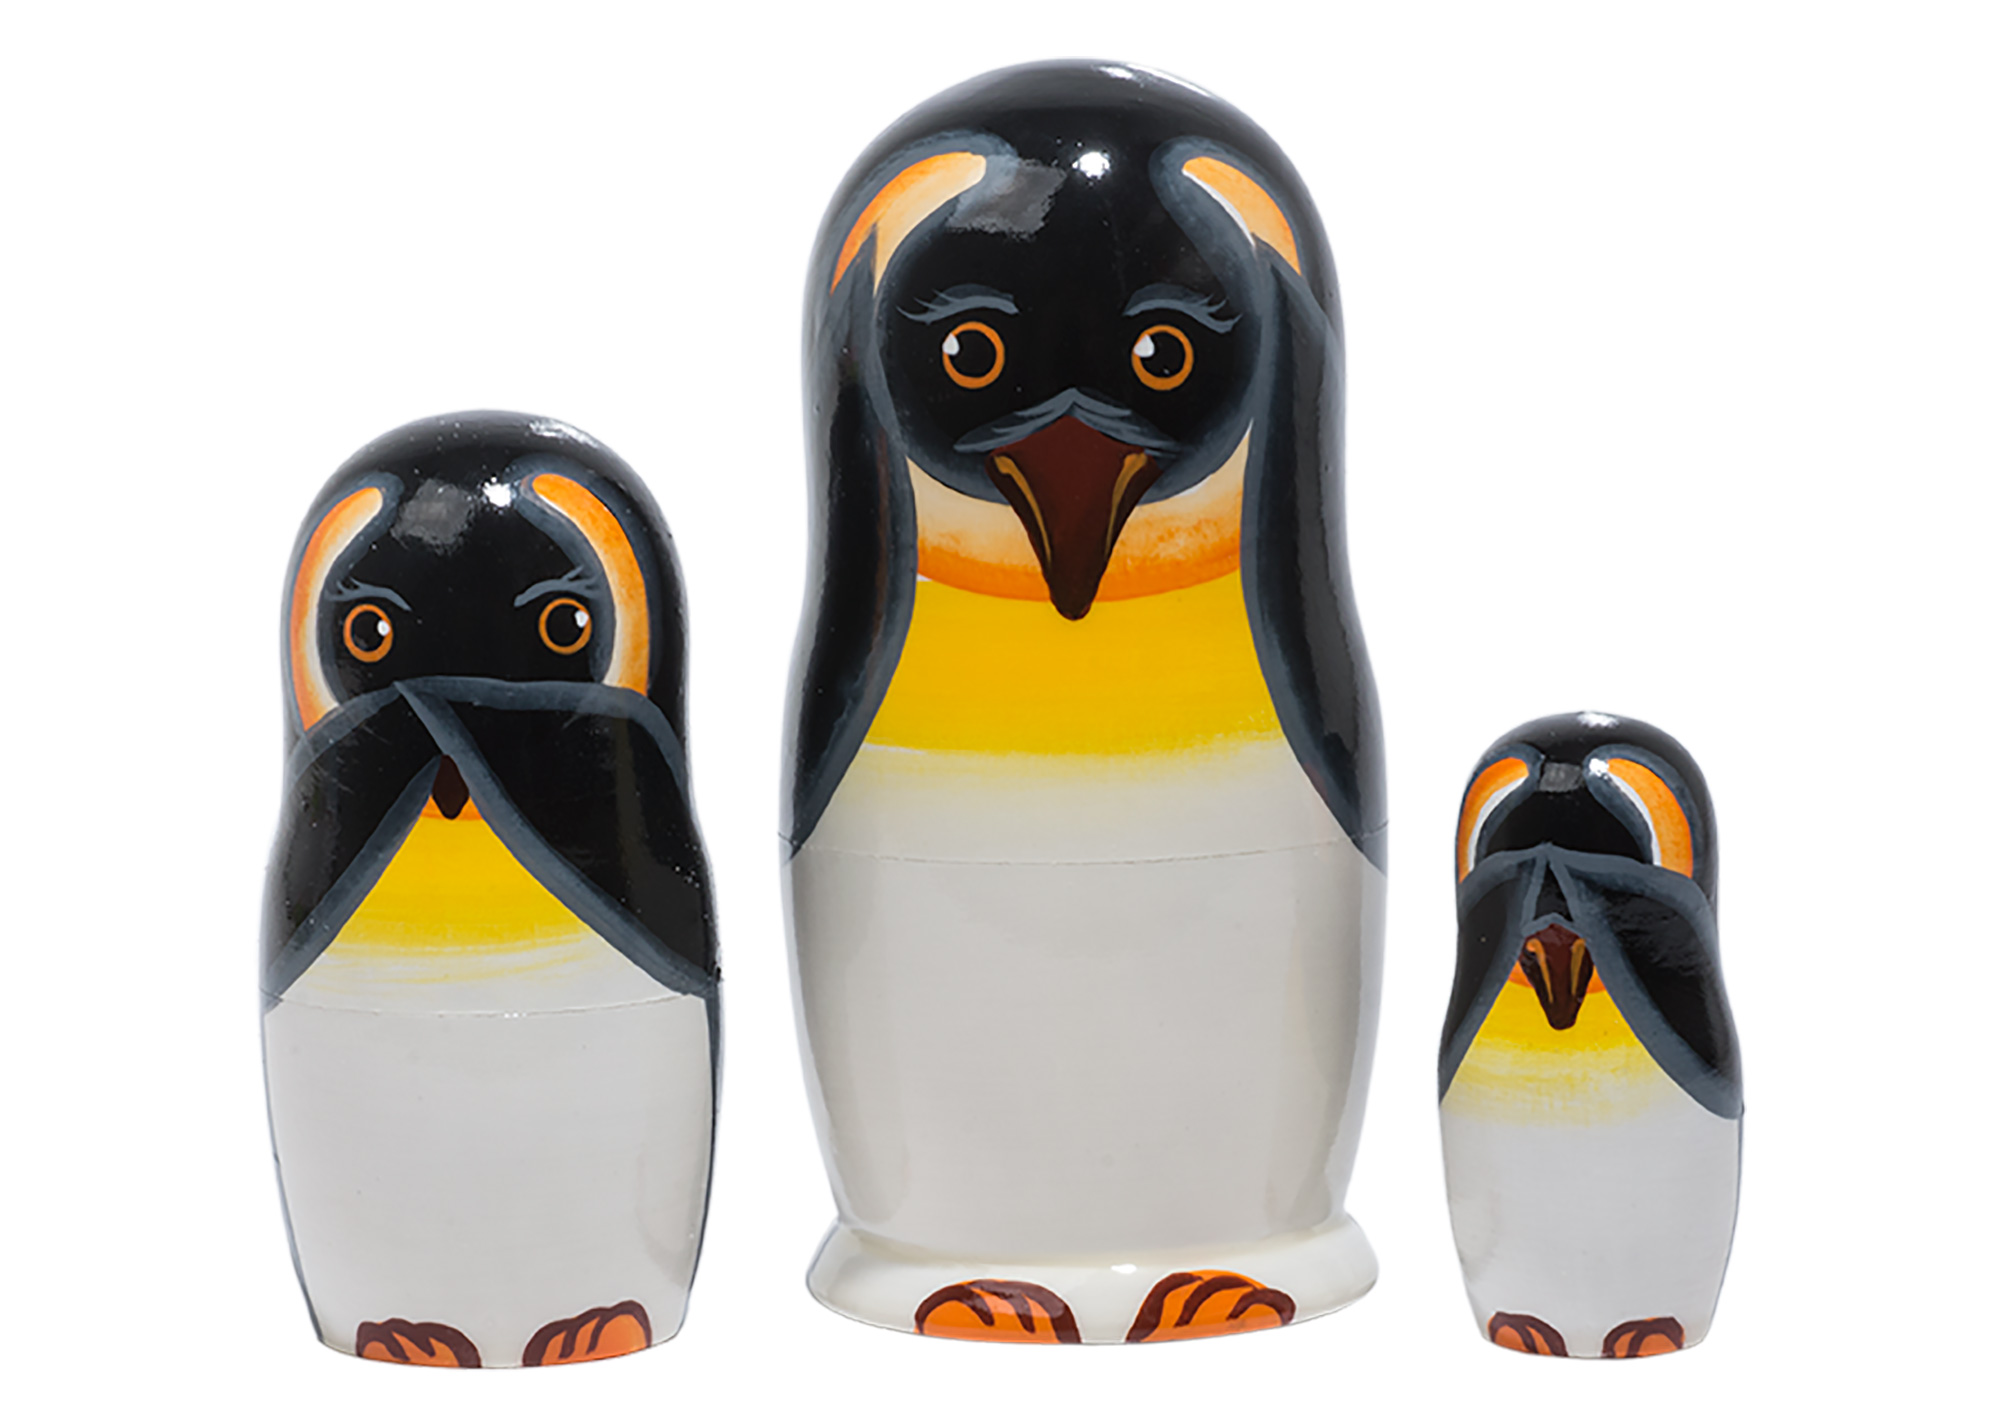 Buy Матрешка "Три пингвина" 3 места 10 см at GoldenCockerel.com